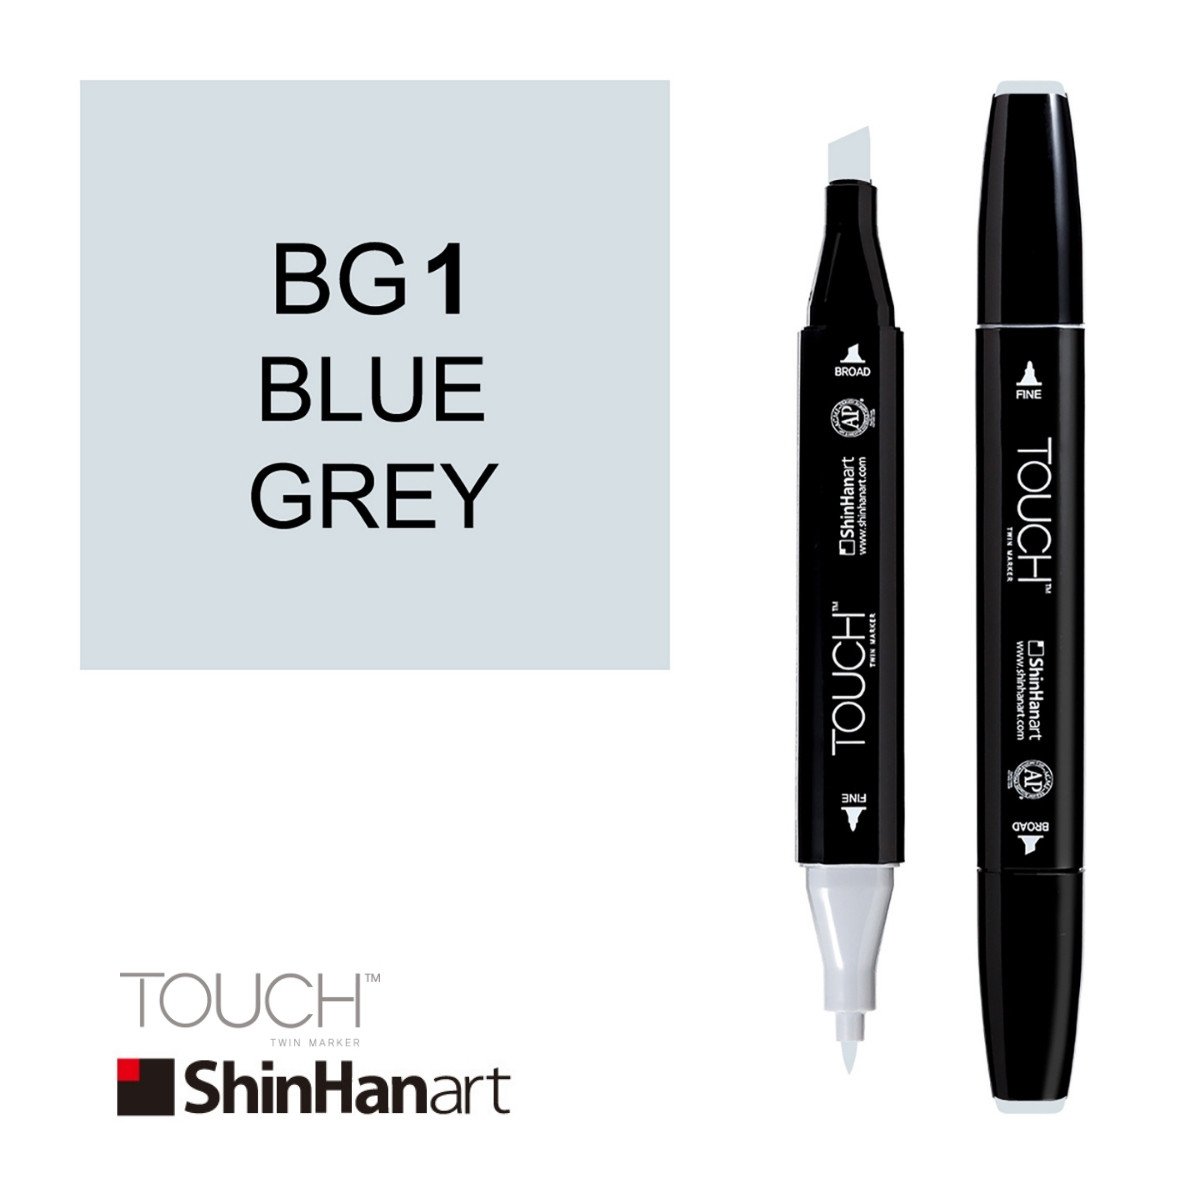 ShinHan Art Touch Twin Marker BG1 Blue Grey